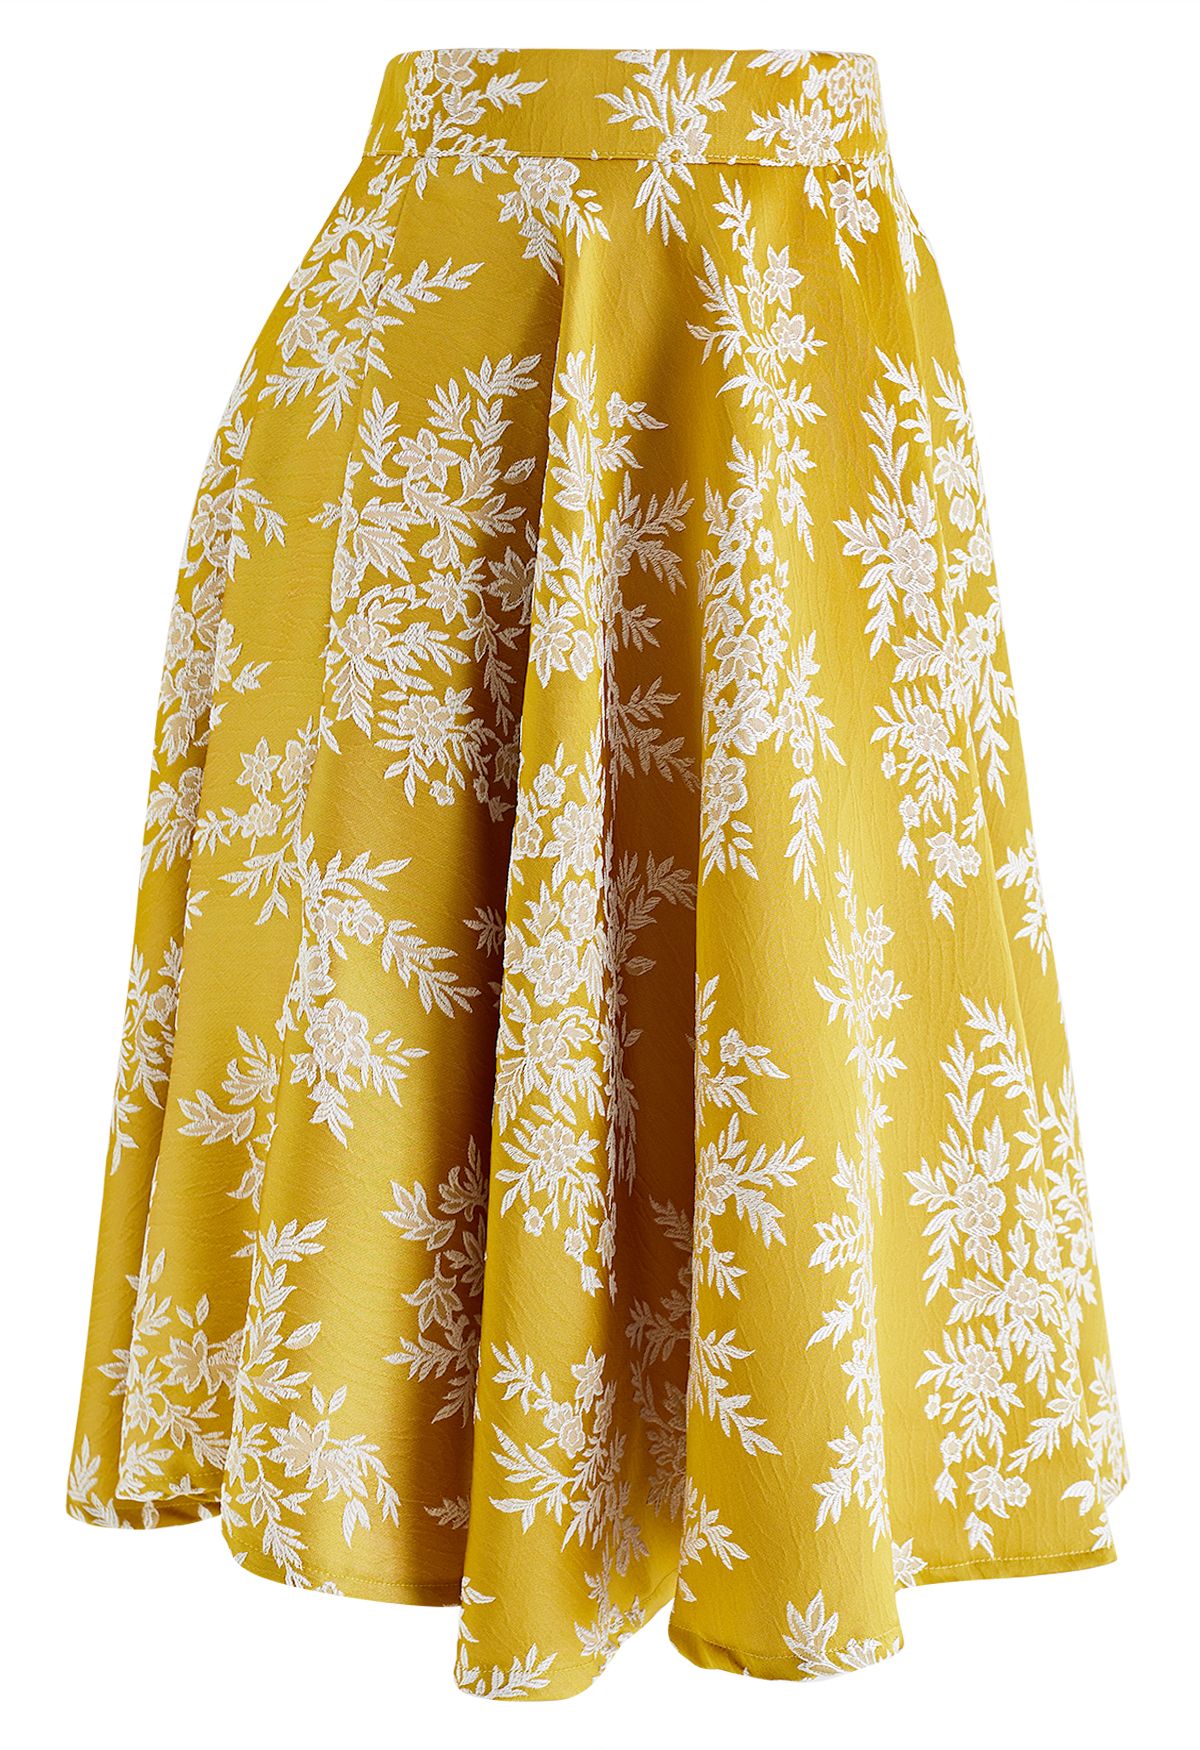 Botanical Jacquard Embroidered Embossed Midi Skirt in Mustard - Retro ...